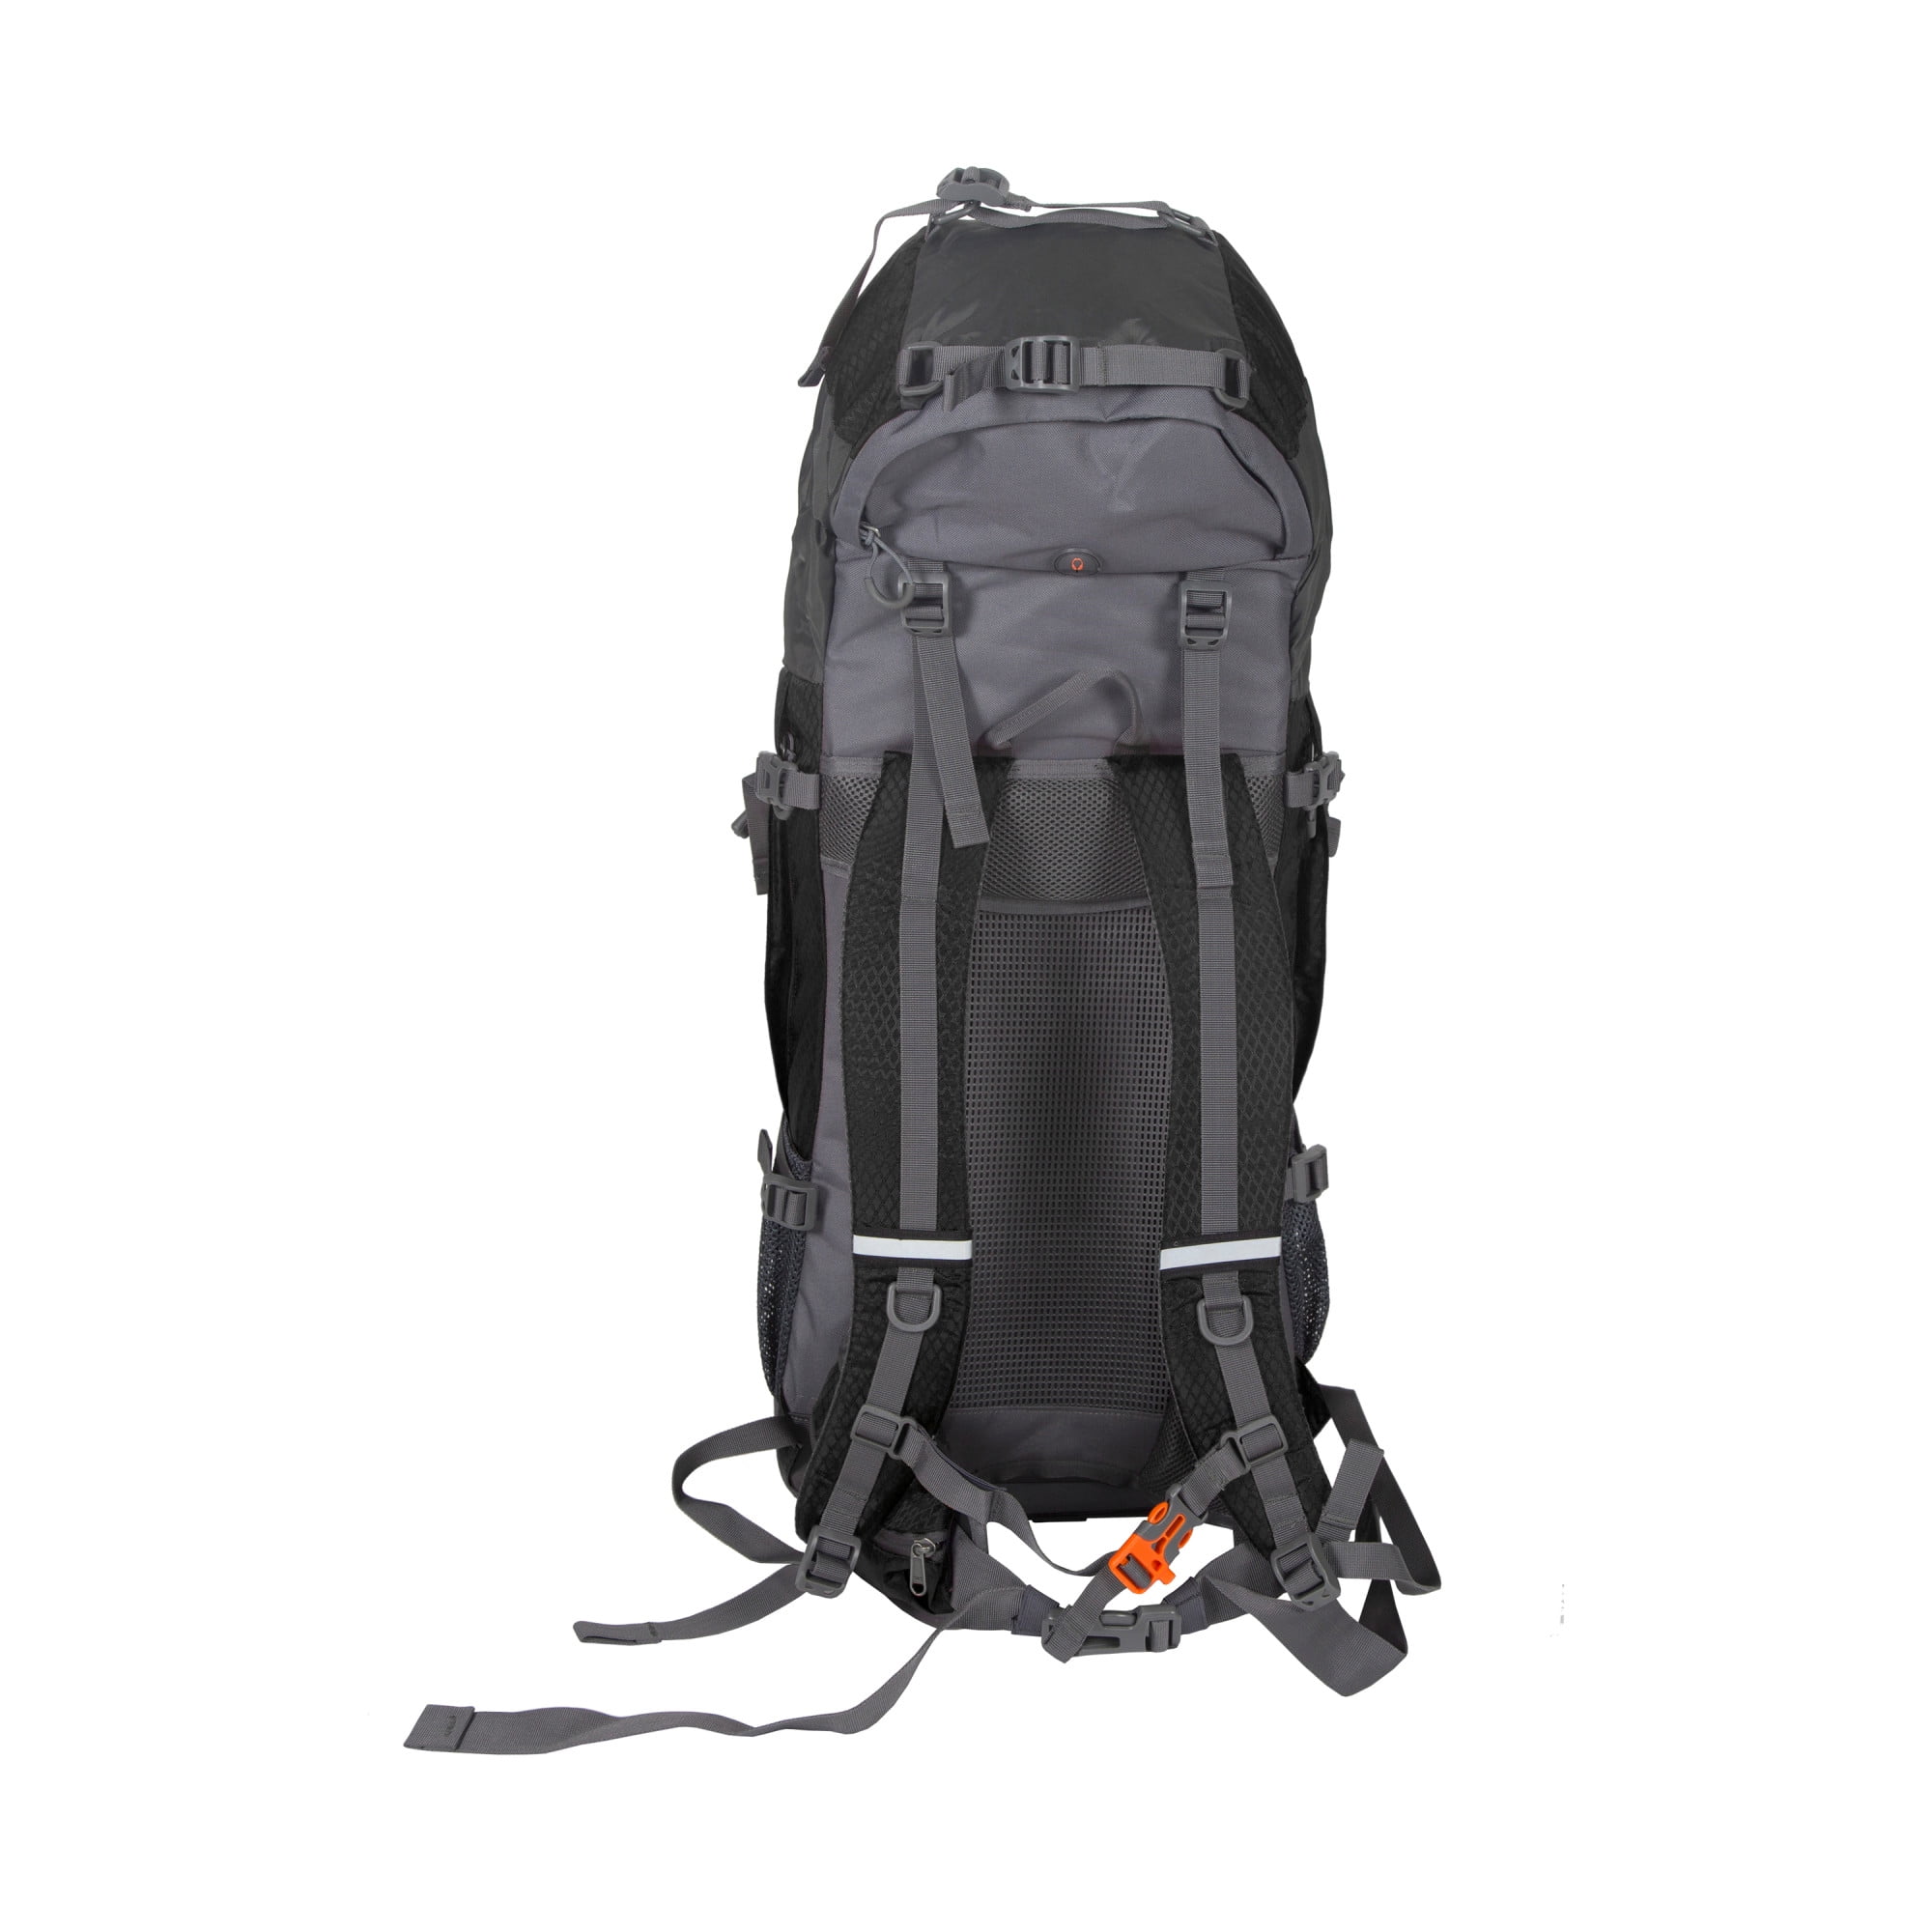 Stansport 50-Liter Internal Frame Backpack for Backpacking Hiking and Travel 